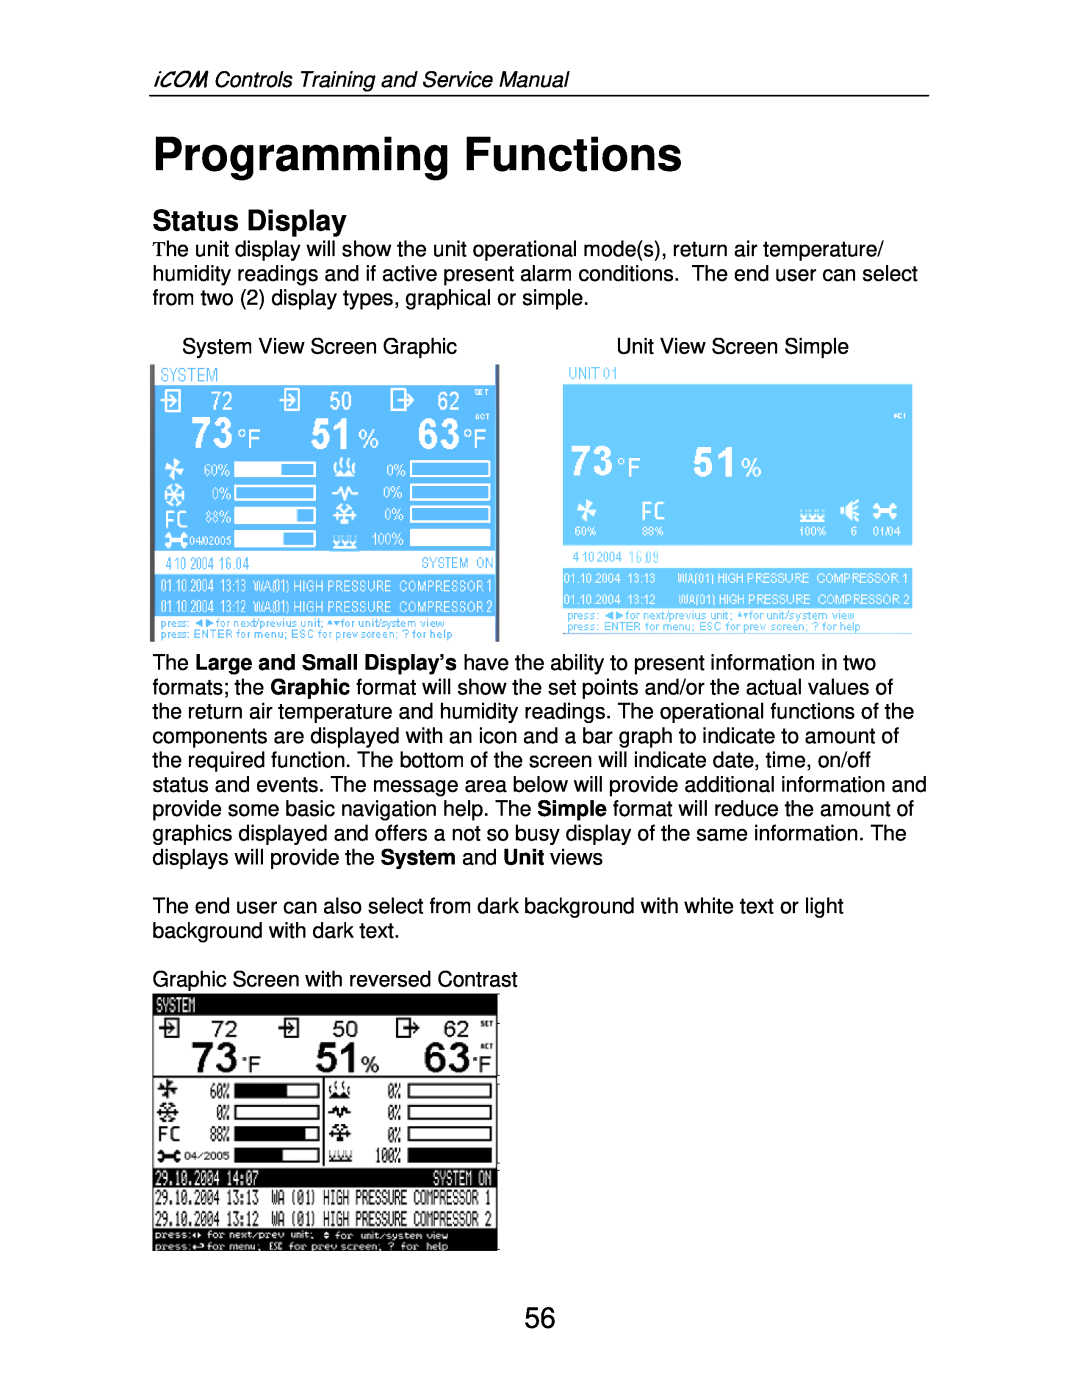 Liebert TM-10098 service manual Programming Functions, Status Display 